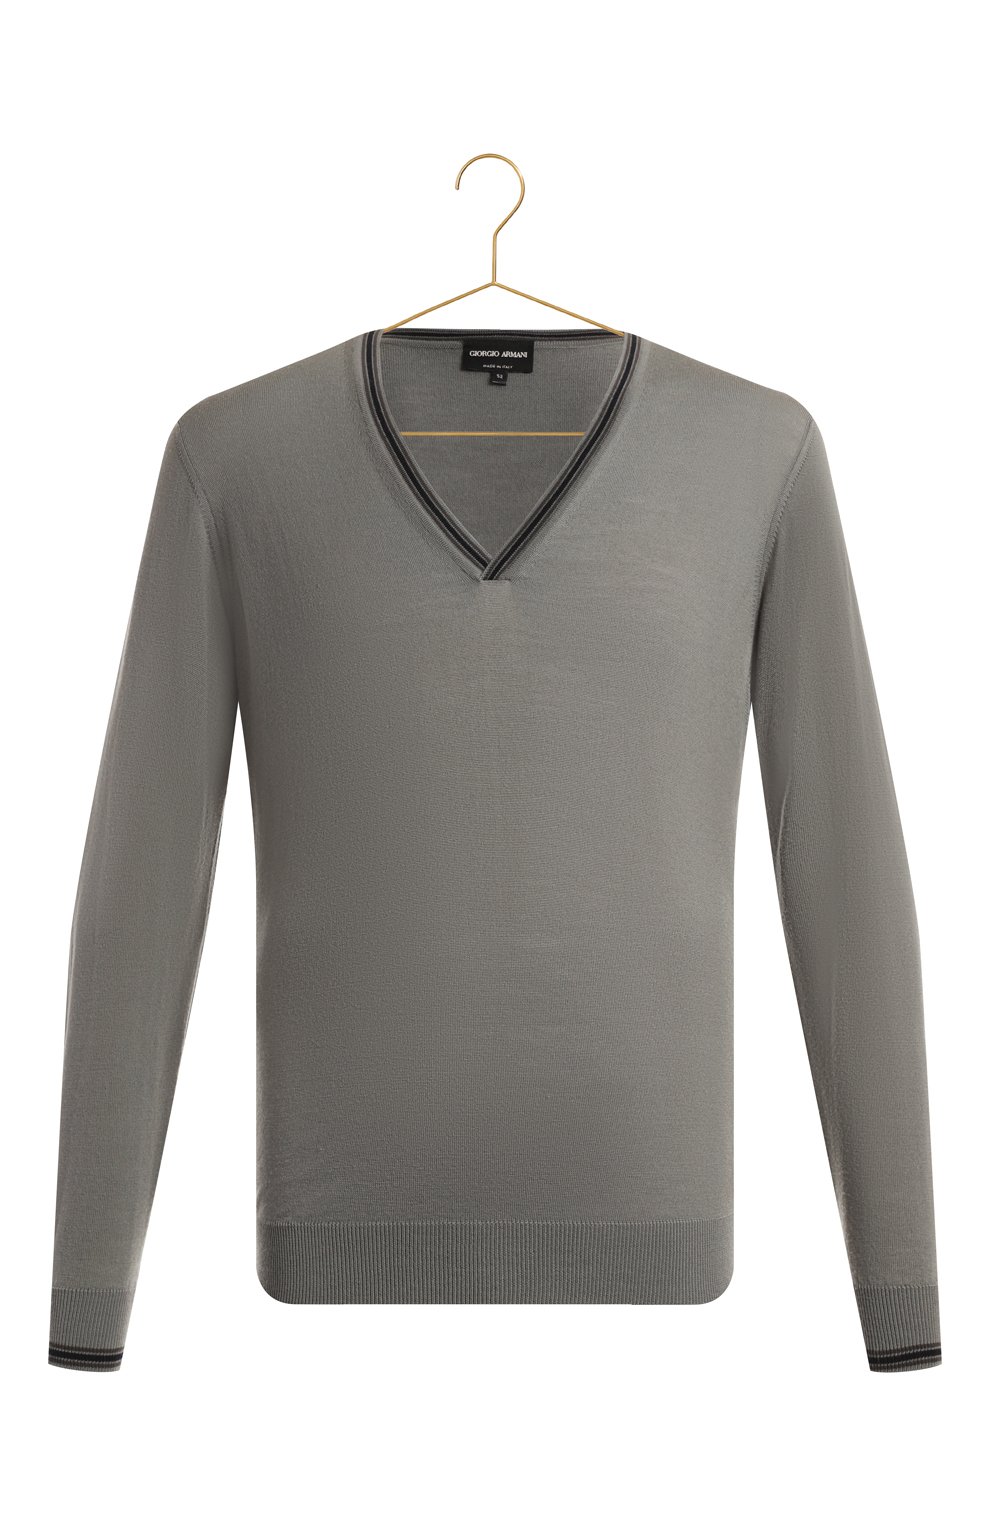 Шерстяной пуловер | Giorgio Armani | Серый - 1